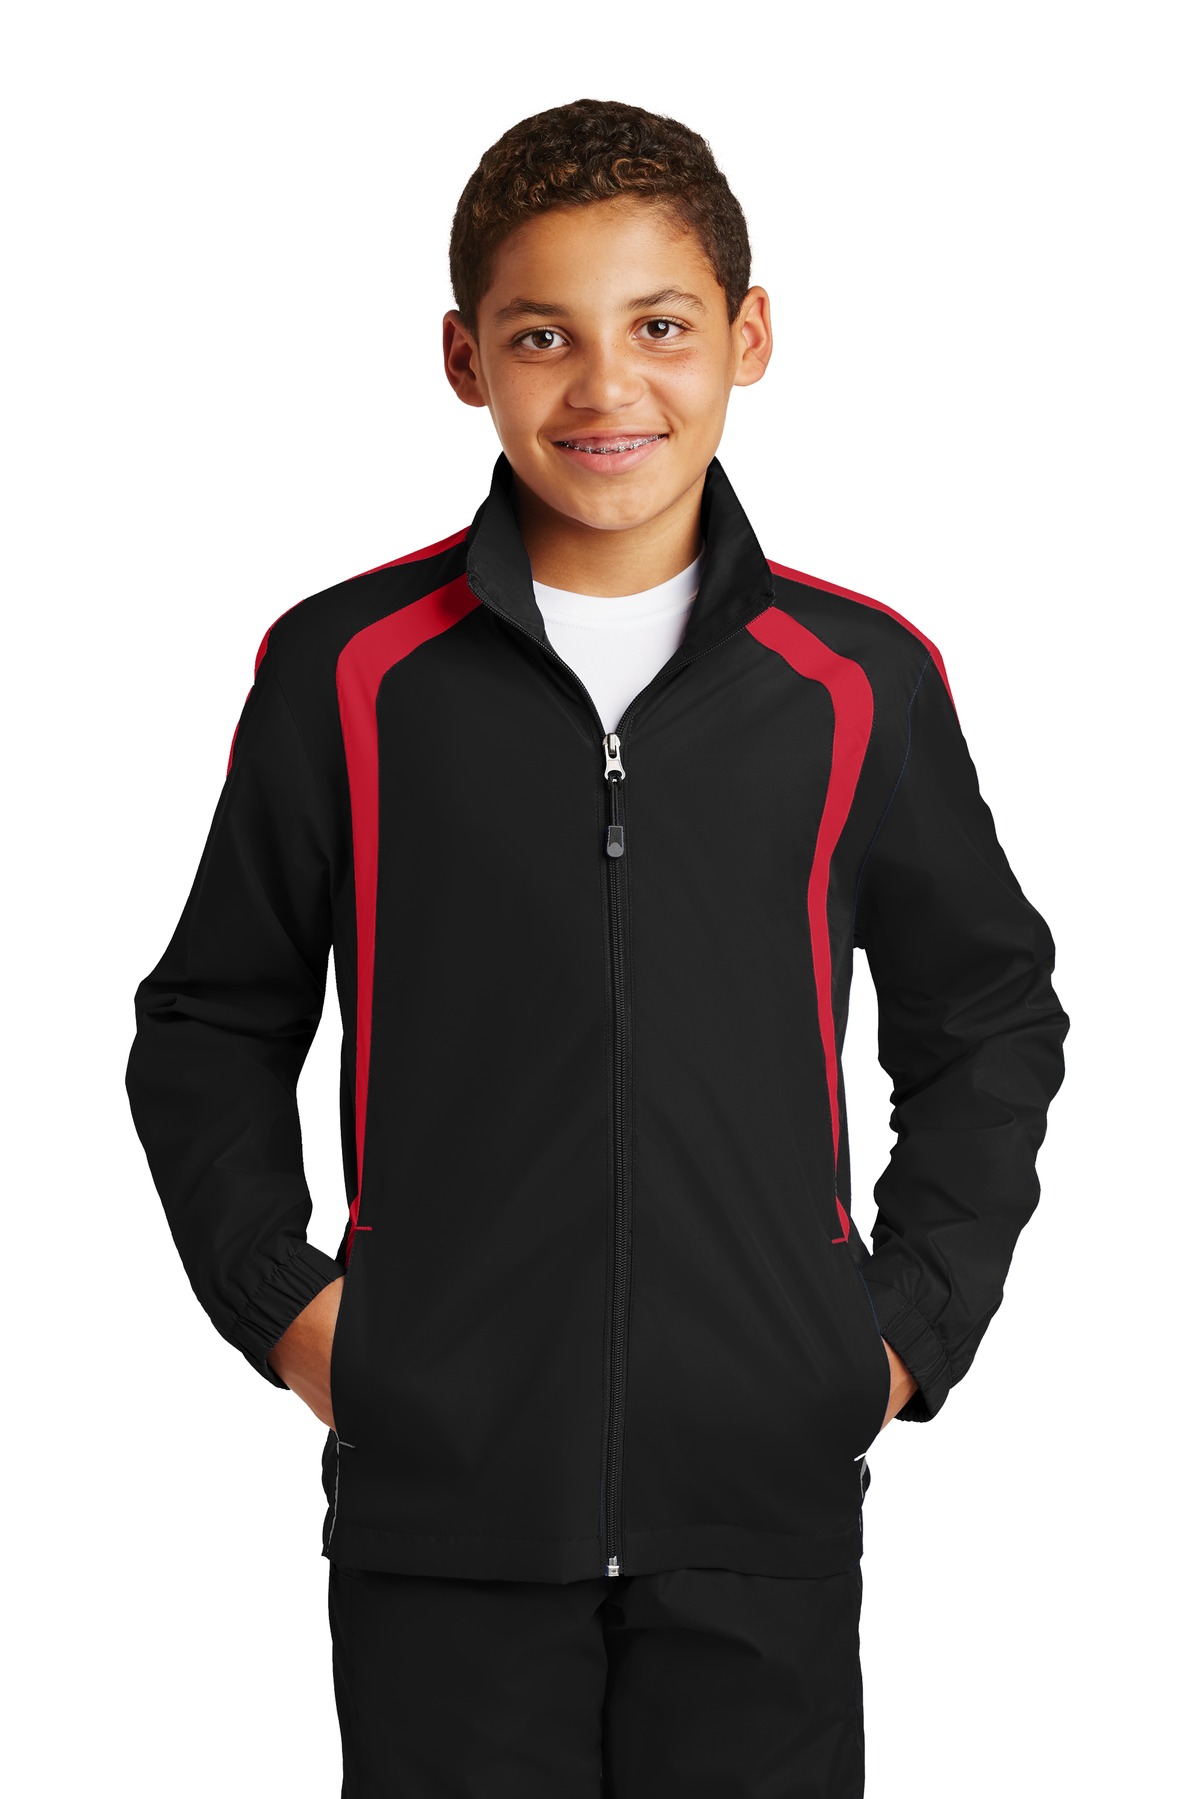 Sport-Tek Hospitality Youth Activewear & Outerwear ® Youth Colorblock Raglan Jacket.-Sport-Tek